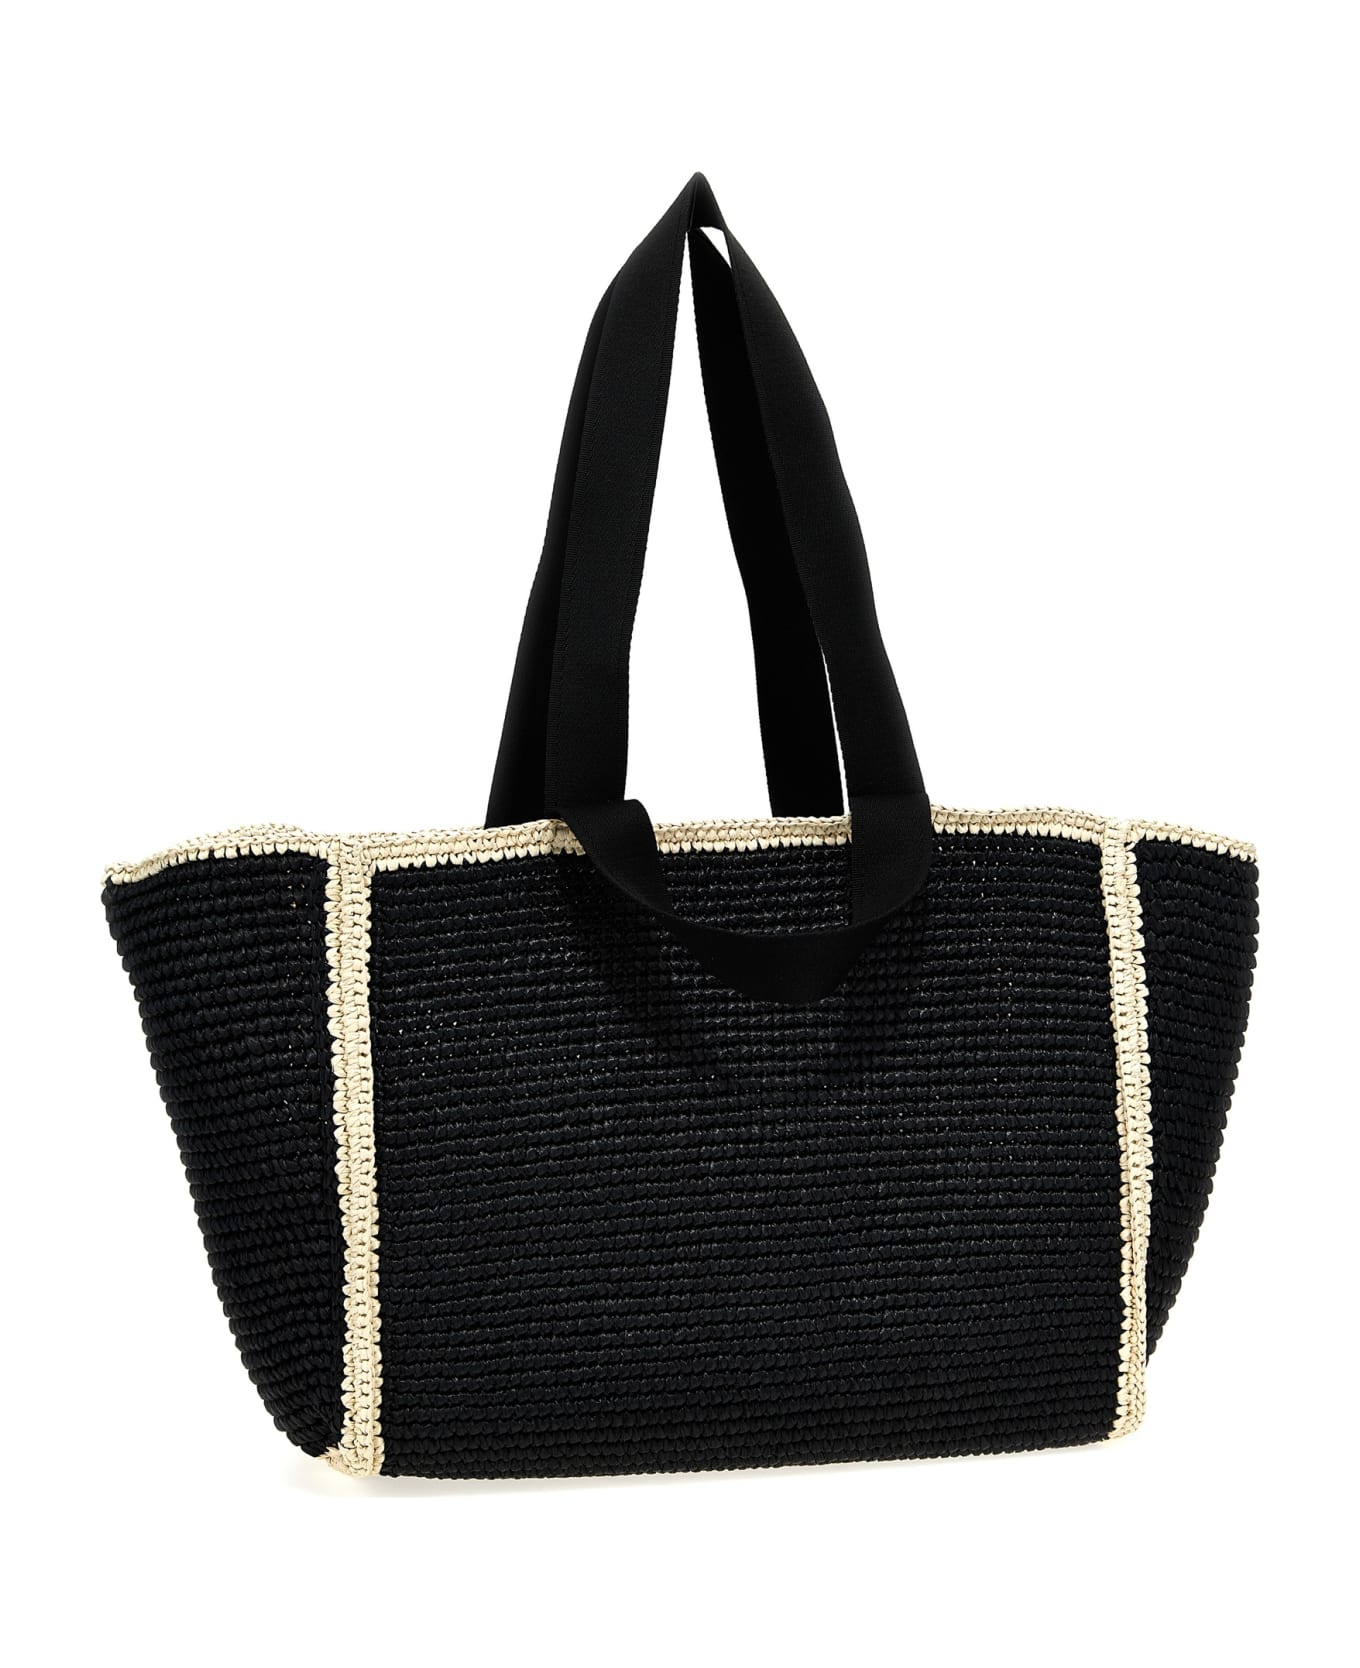 Marni Macramé Shopping Bag - Black/ivory/black